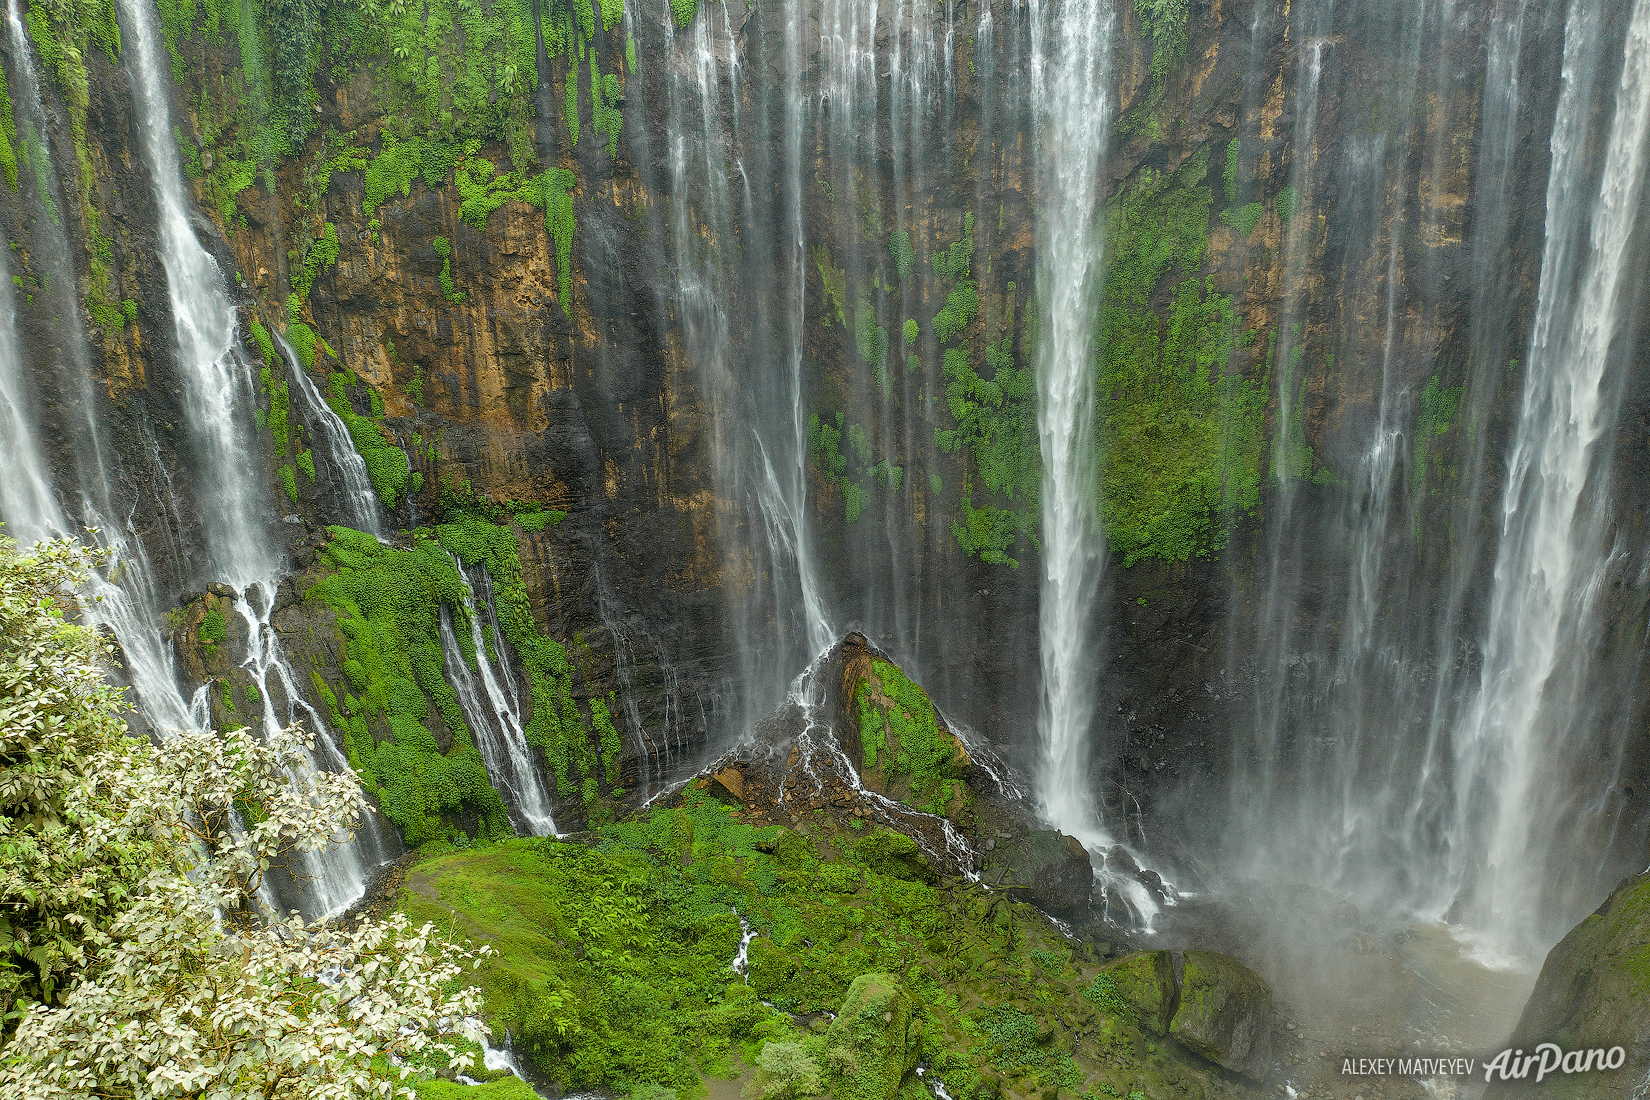 Tmpak Sewu Waterfall